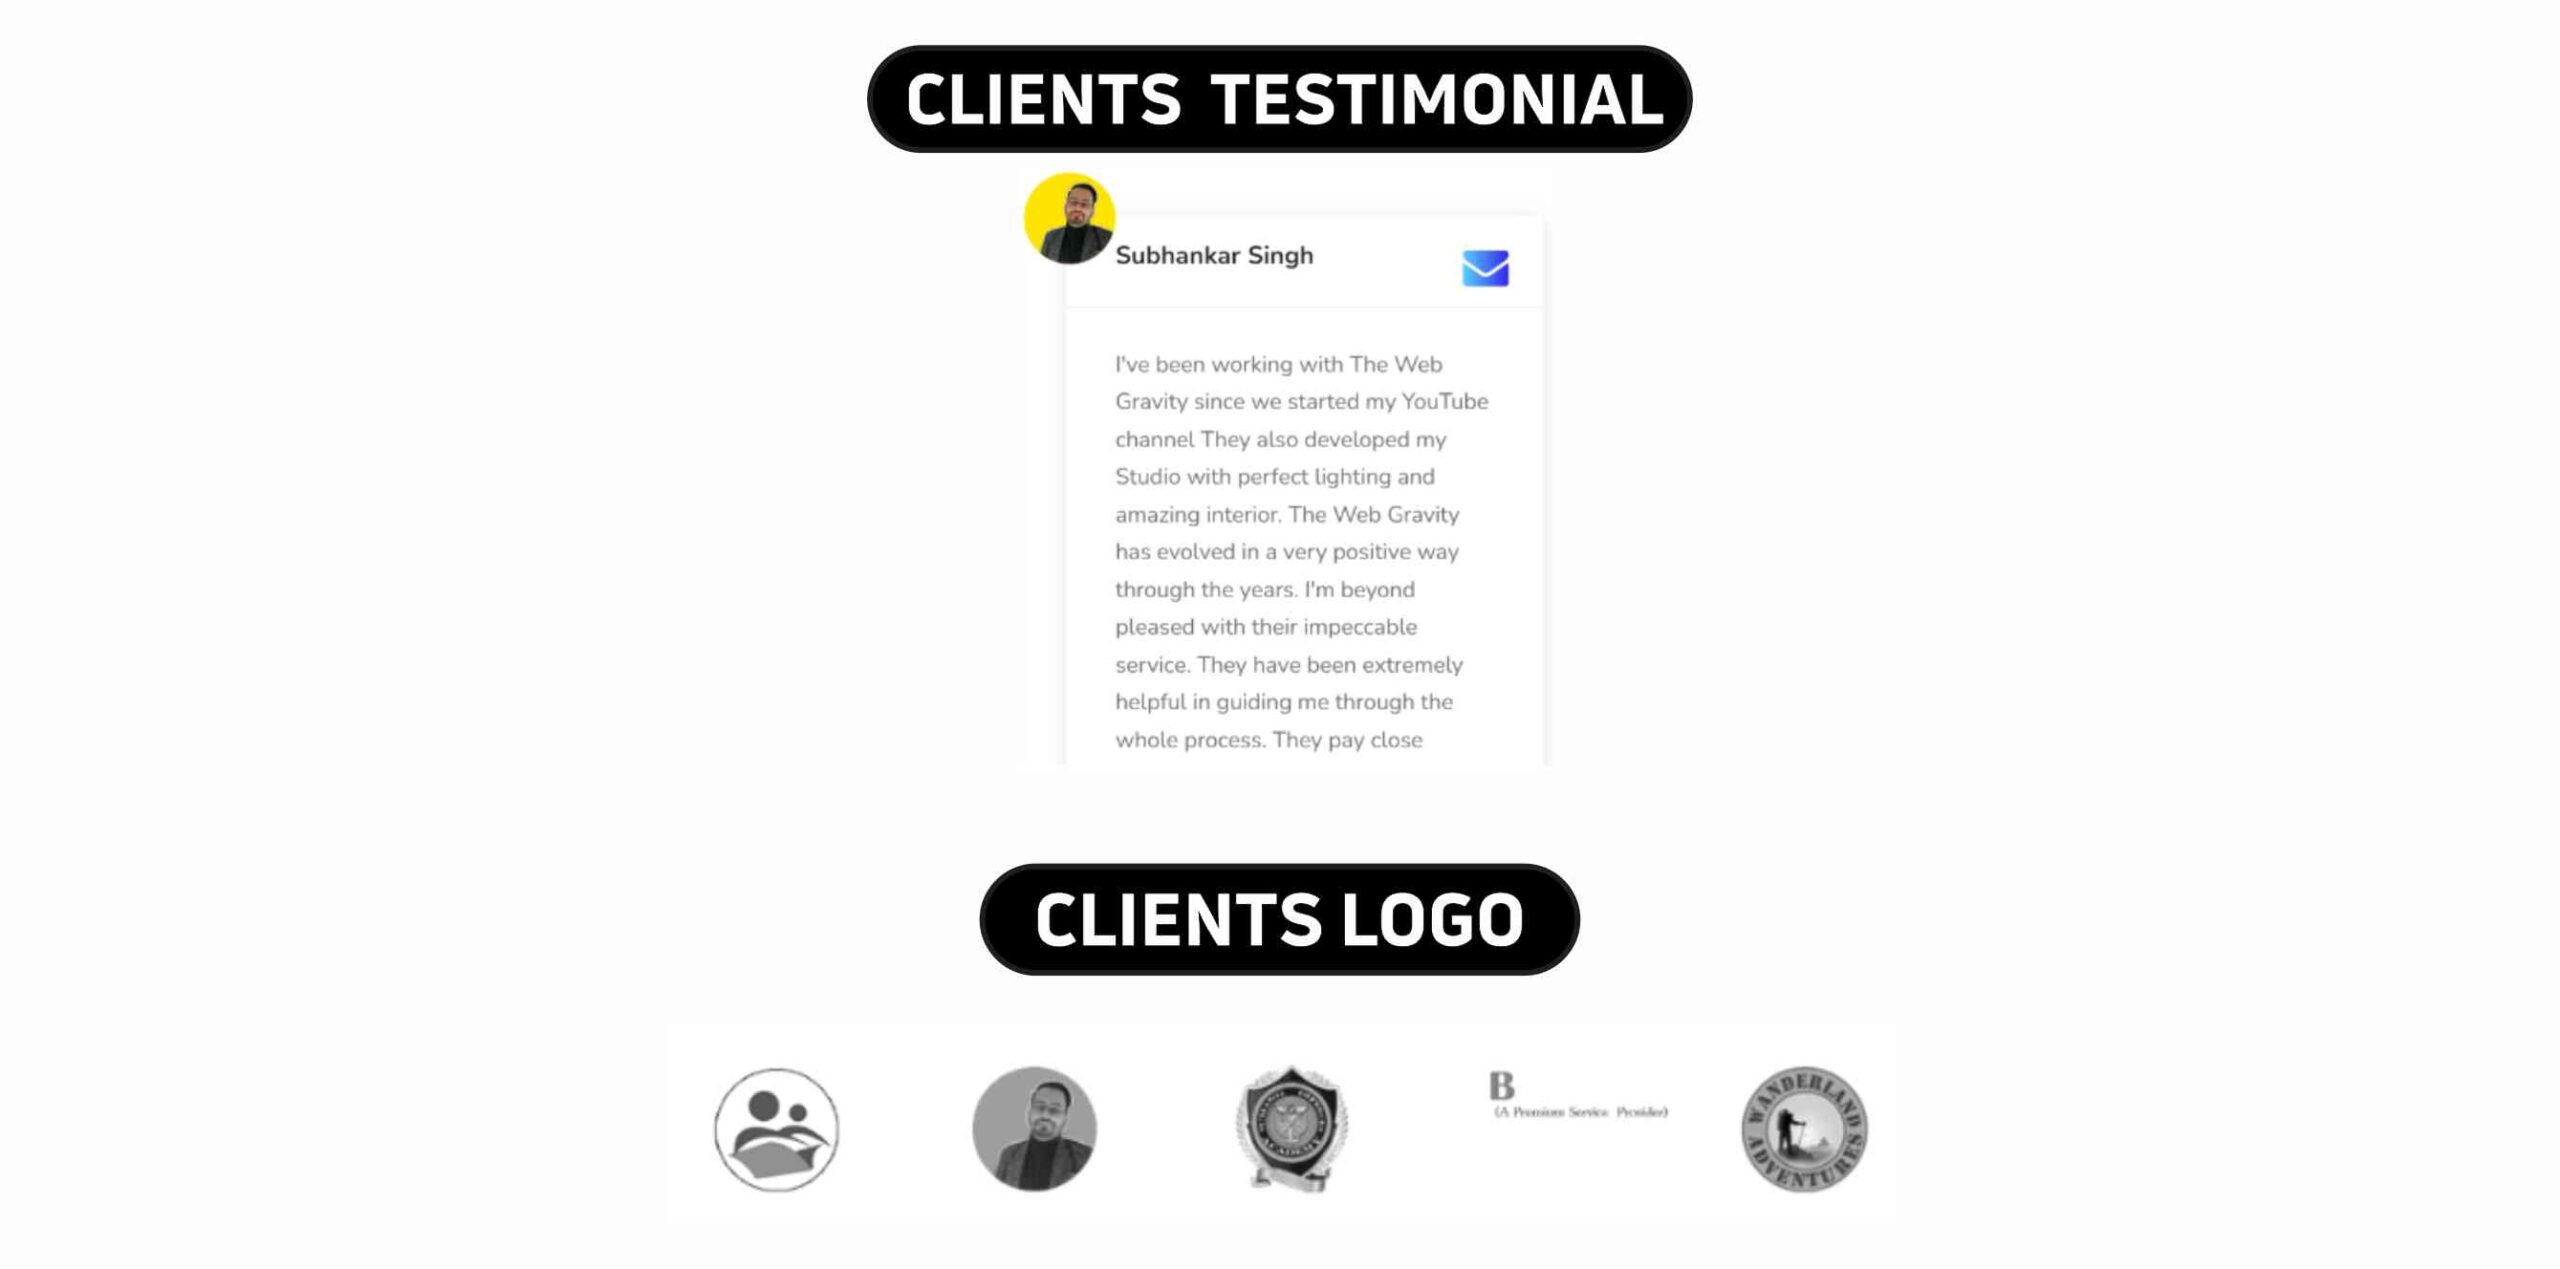 The Web Gravity Client Testimonial & Client Logos